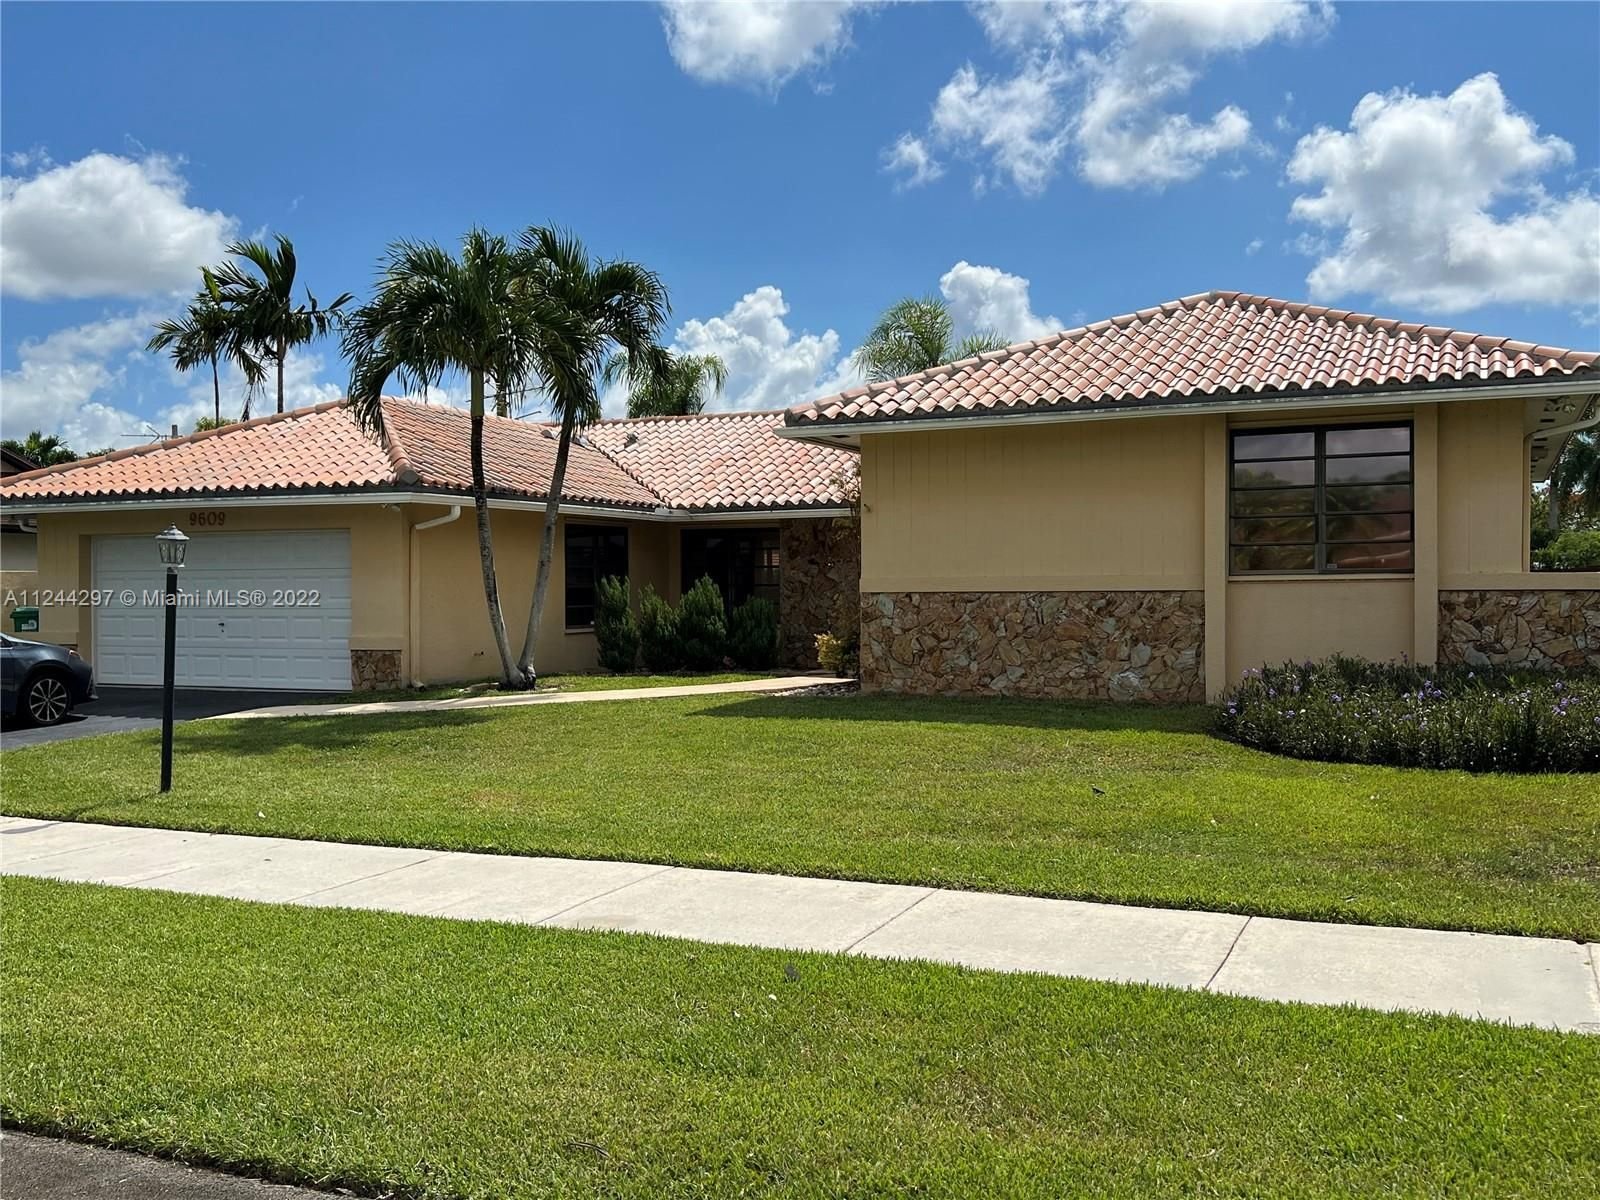 Real estate property located at 9609 117th Ct, Miami-Dade County, Miami, FL